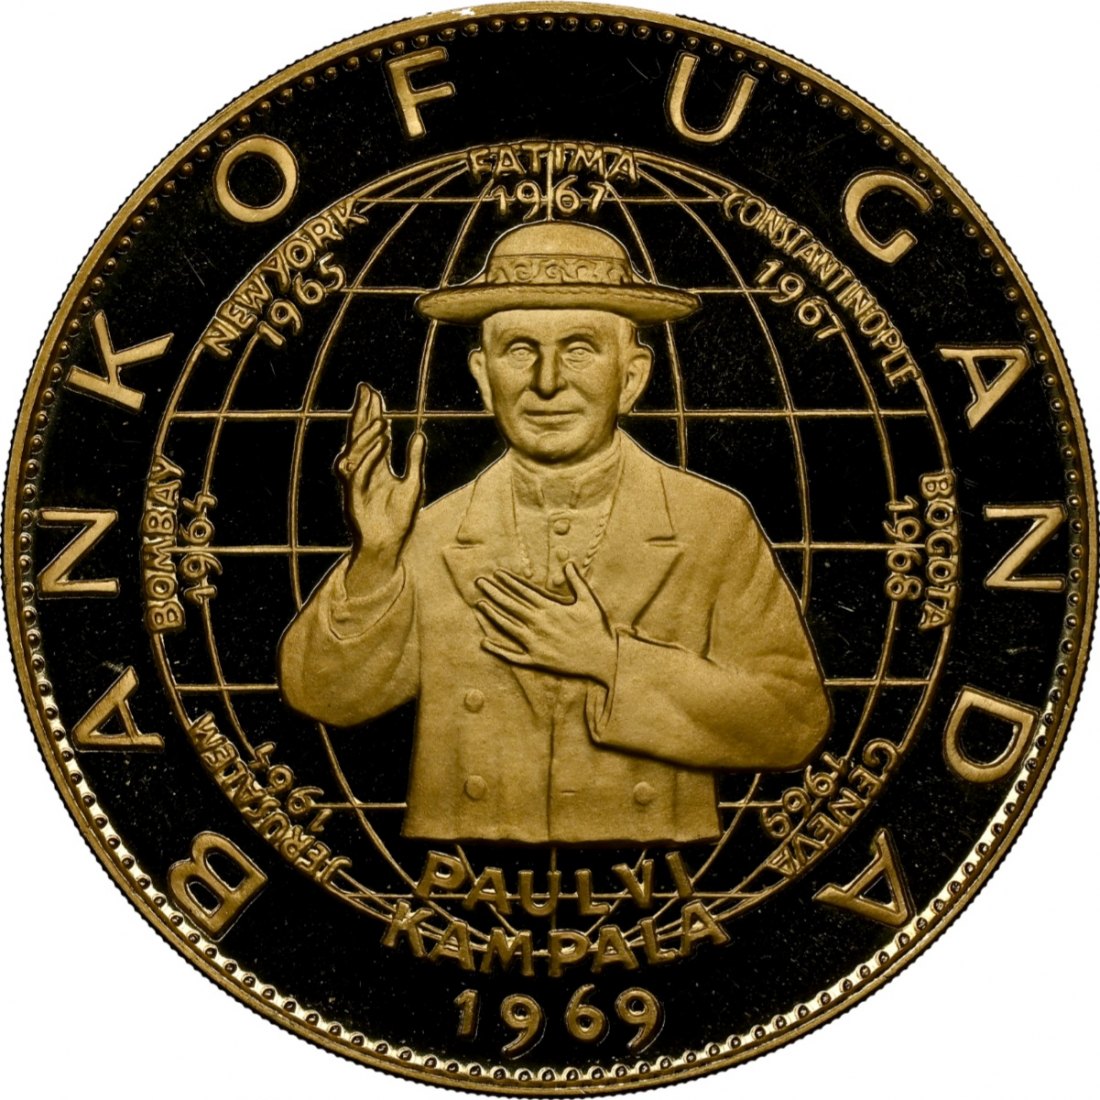  Uganda 500 Shillings 1970 | NGC PF67 ULTRA CAMEO TOP POP | Besuch von Papst Paul VI 1969   